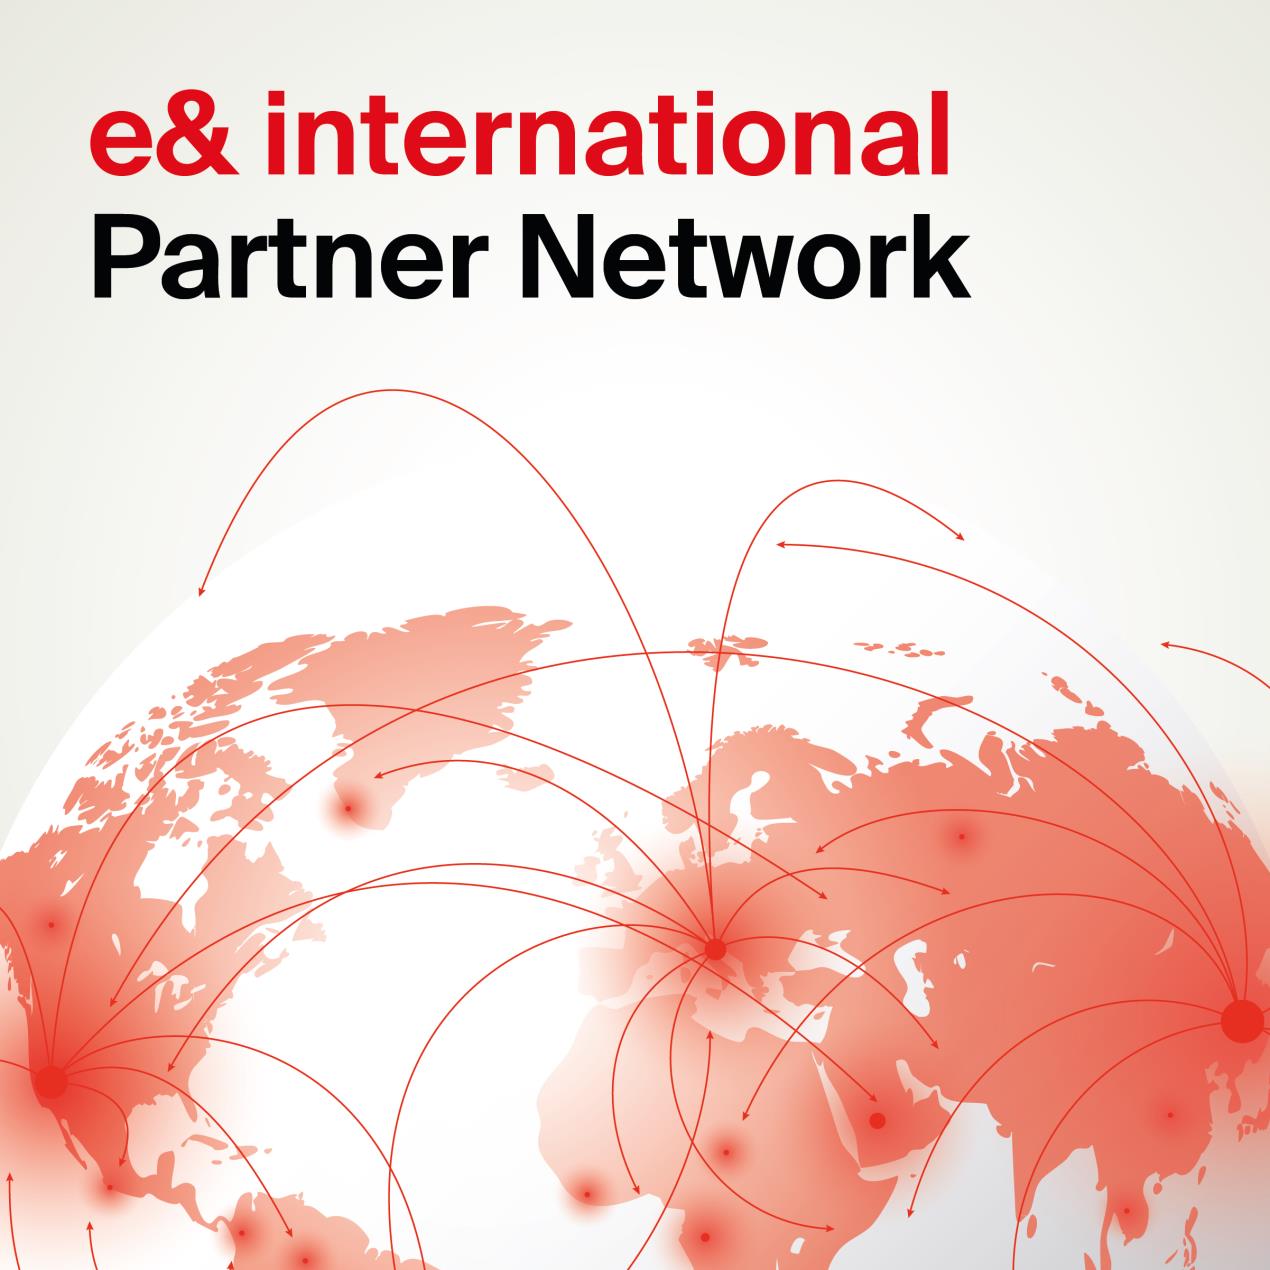 e& انترناشونال تطلق برنامج “e& partner networks” للشراكات